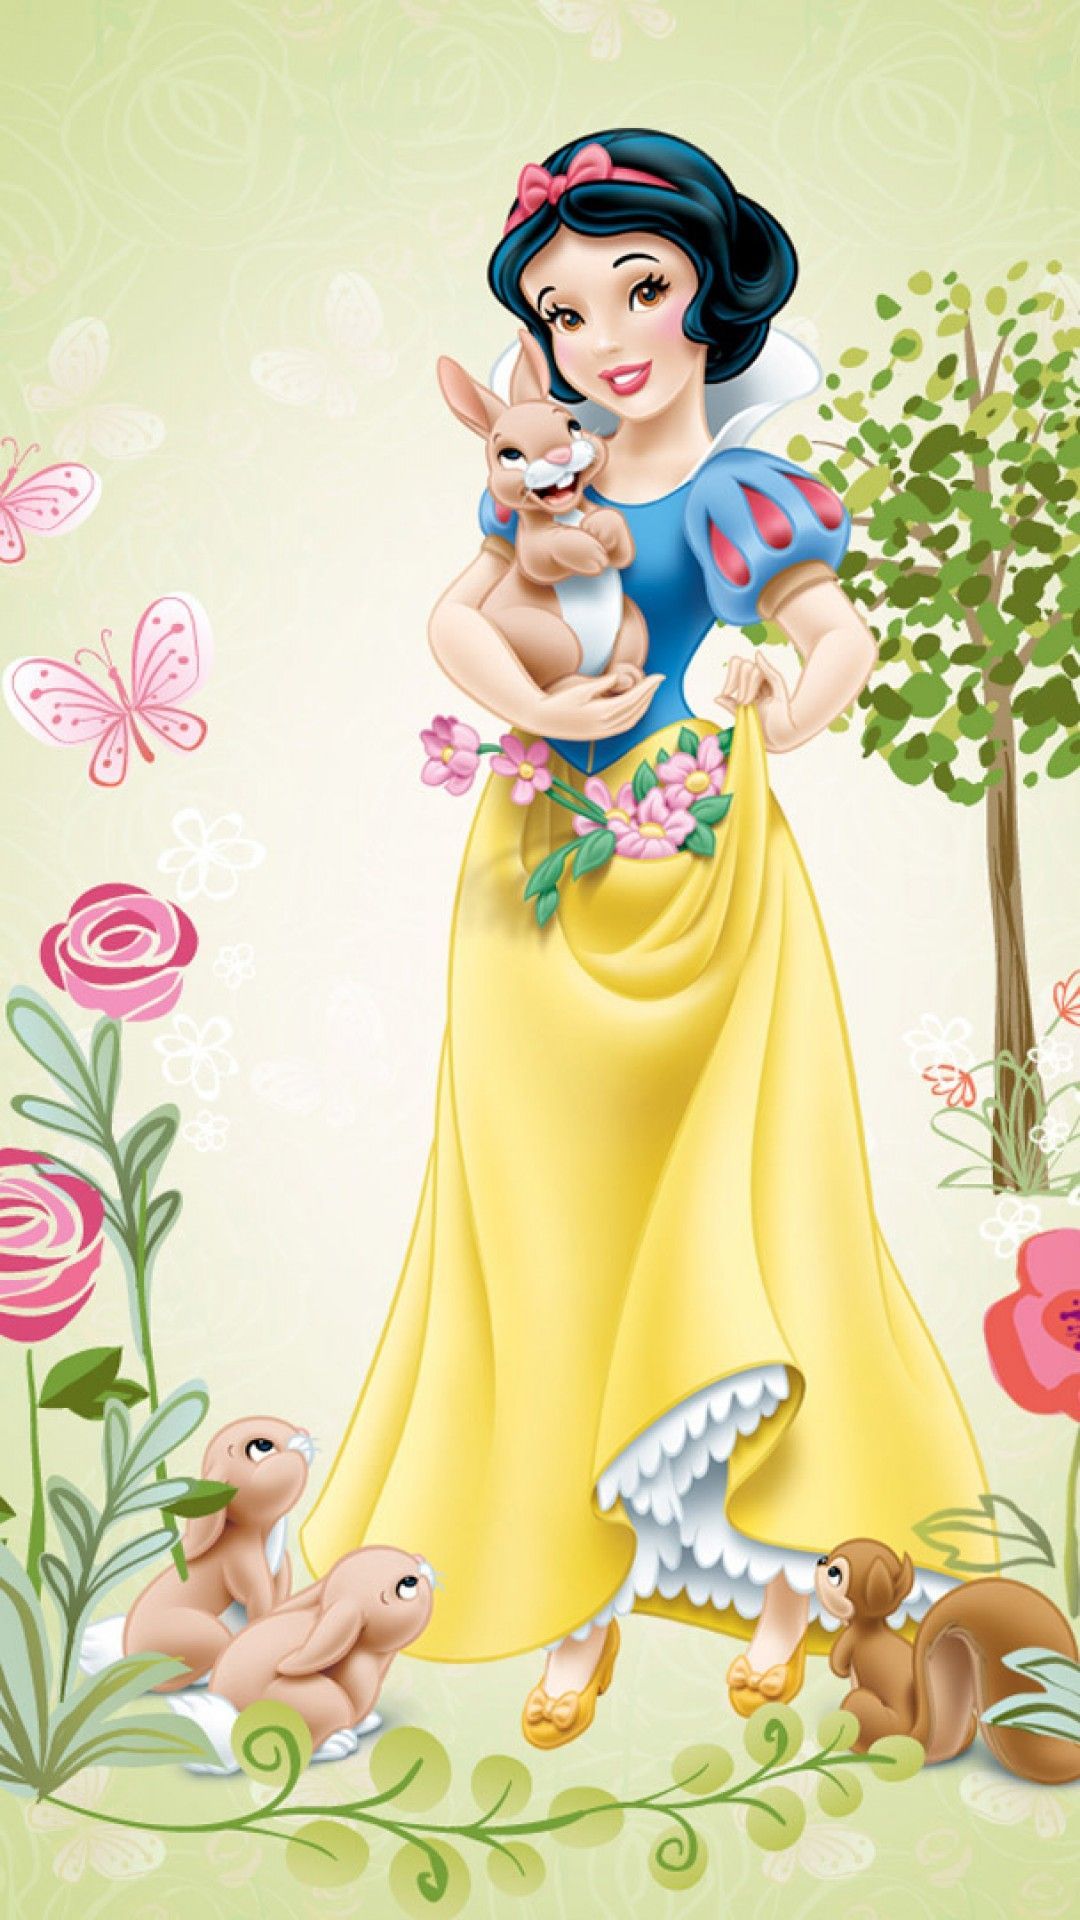 Disney Princess Wallpaper 1080p Hupages Download iPhone Wallpaper. Disney princess snow white, Disney princess wallpaper, Disney princess fashion